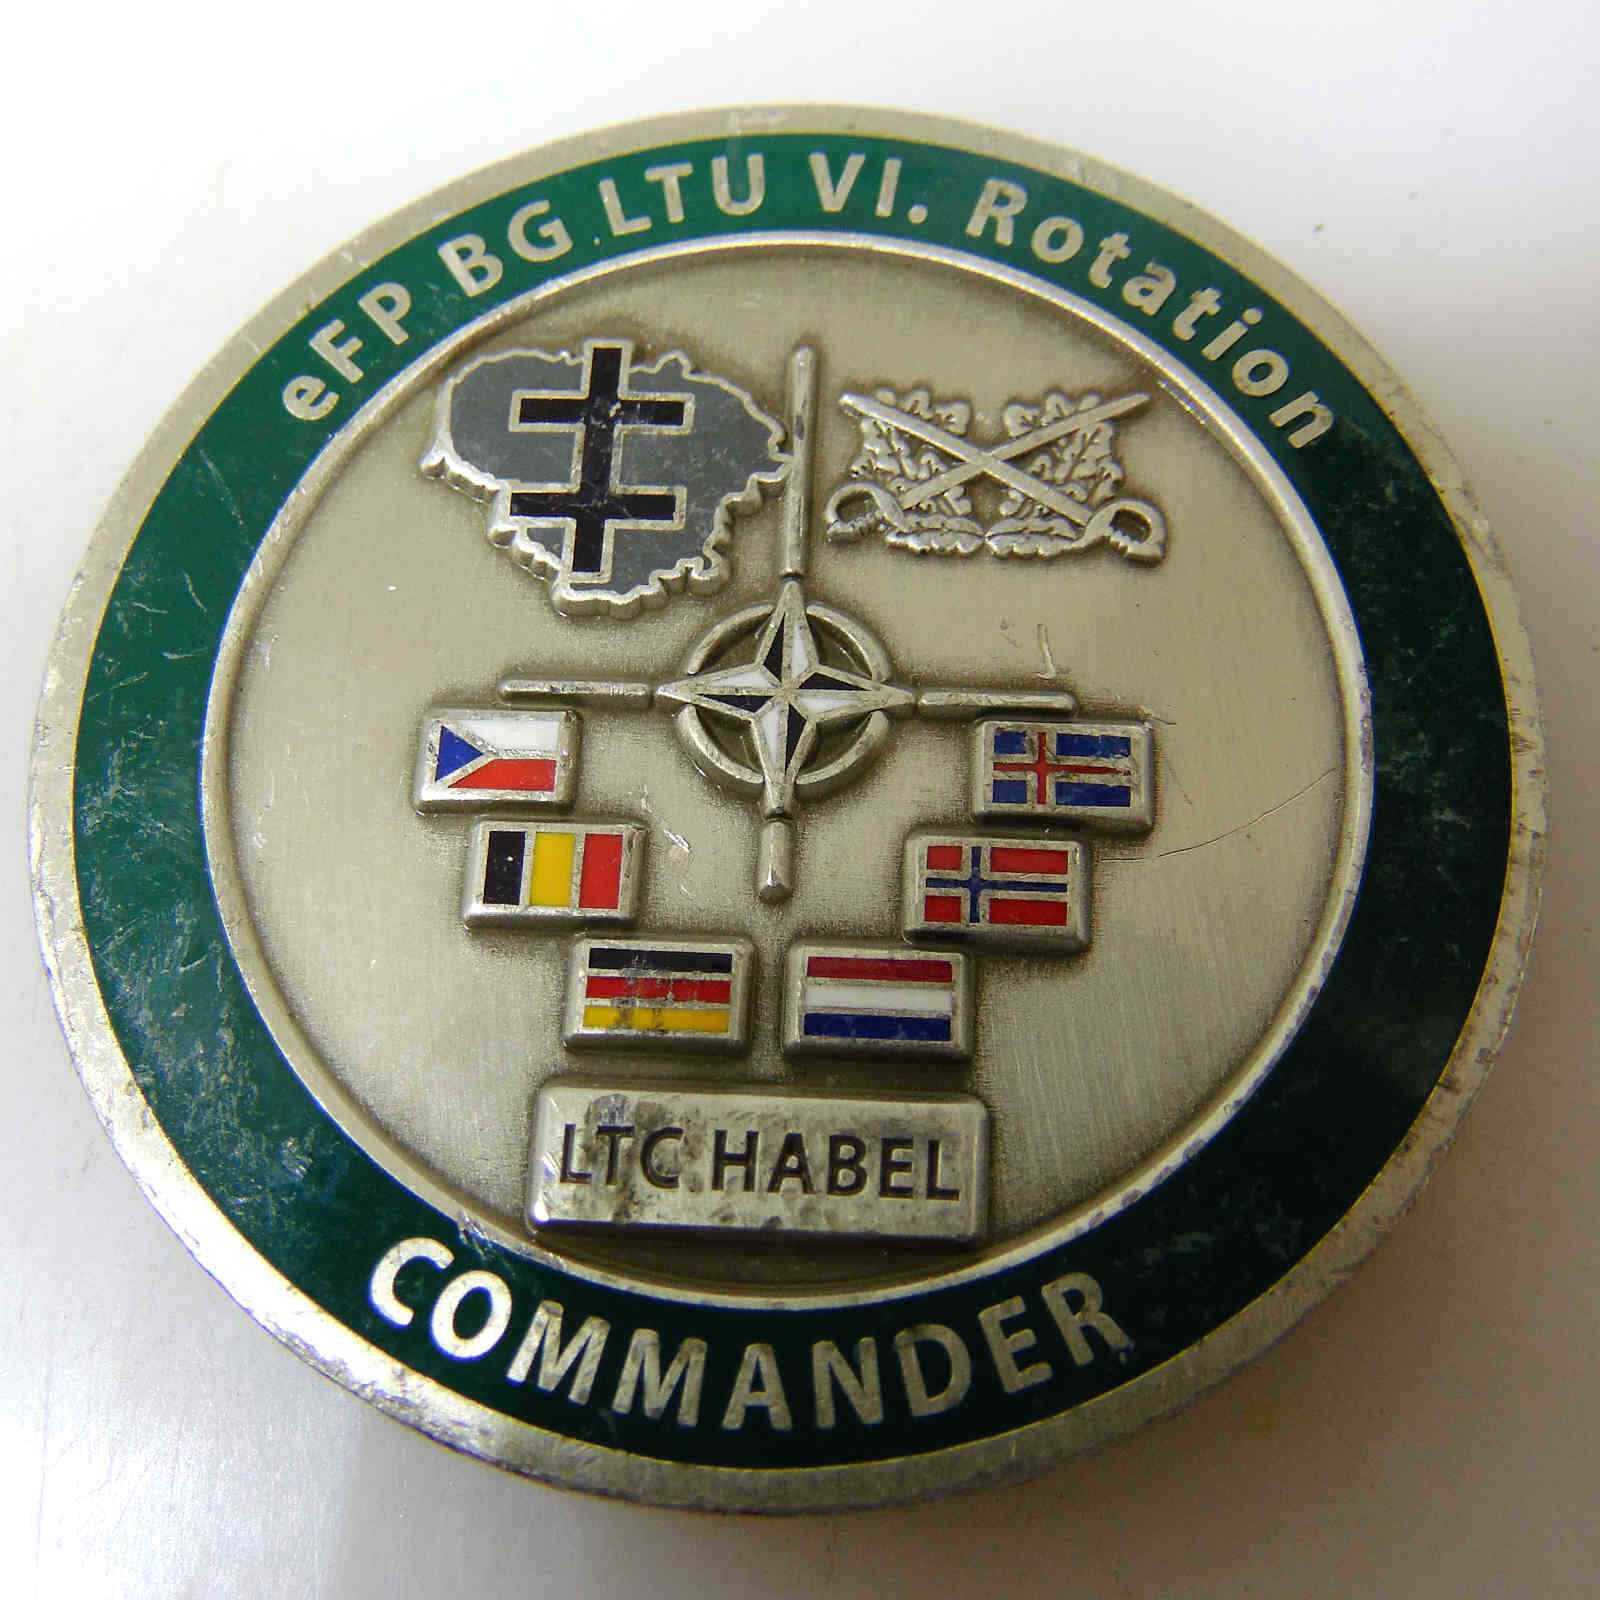 EFP BG LTU VI ROTATION COMMANDER LTC HABEL NATO OTAN CHALLENGE COIN